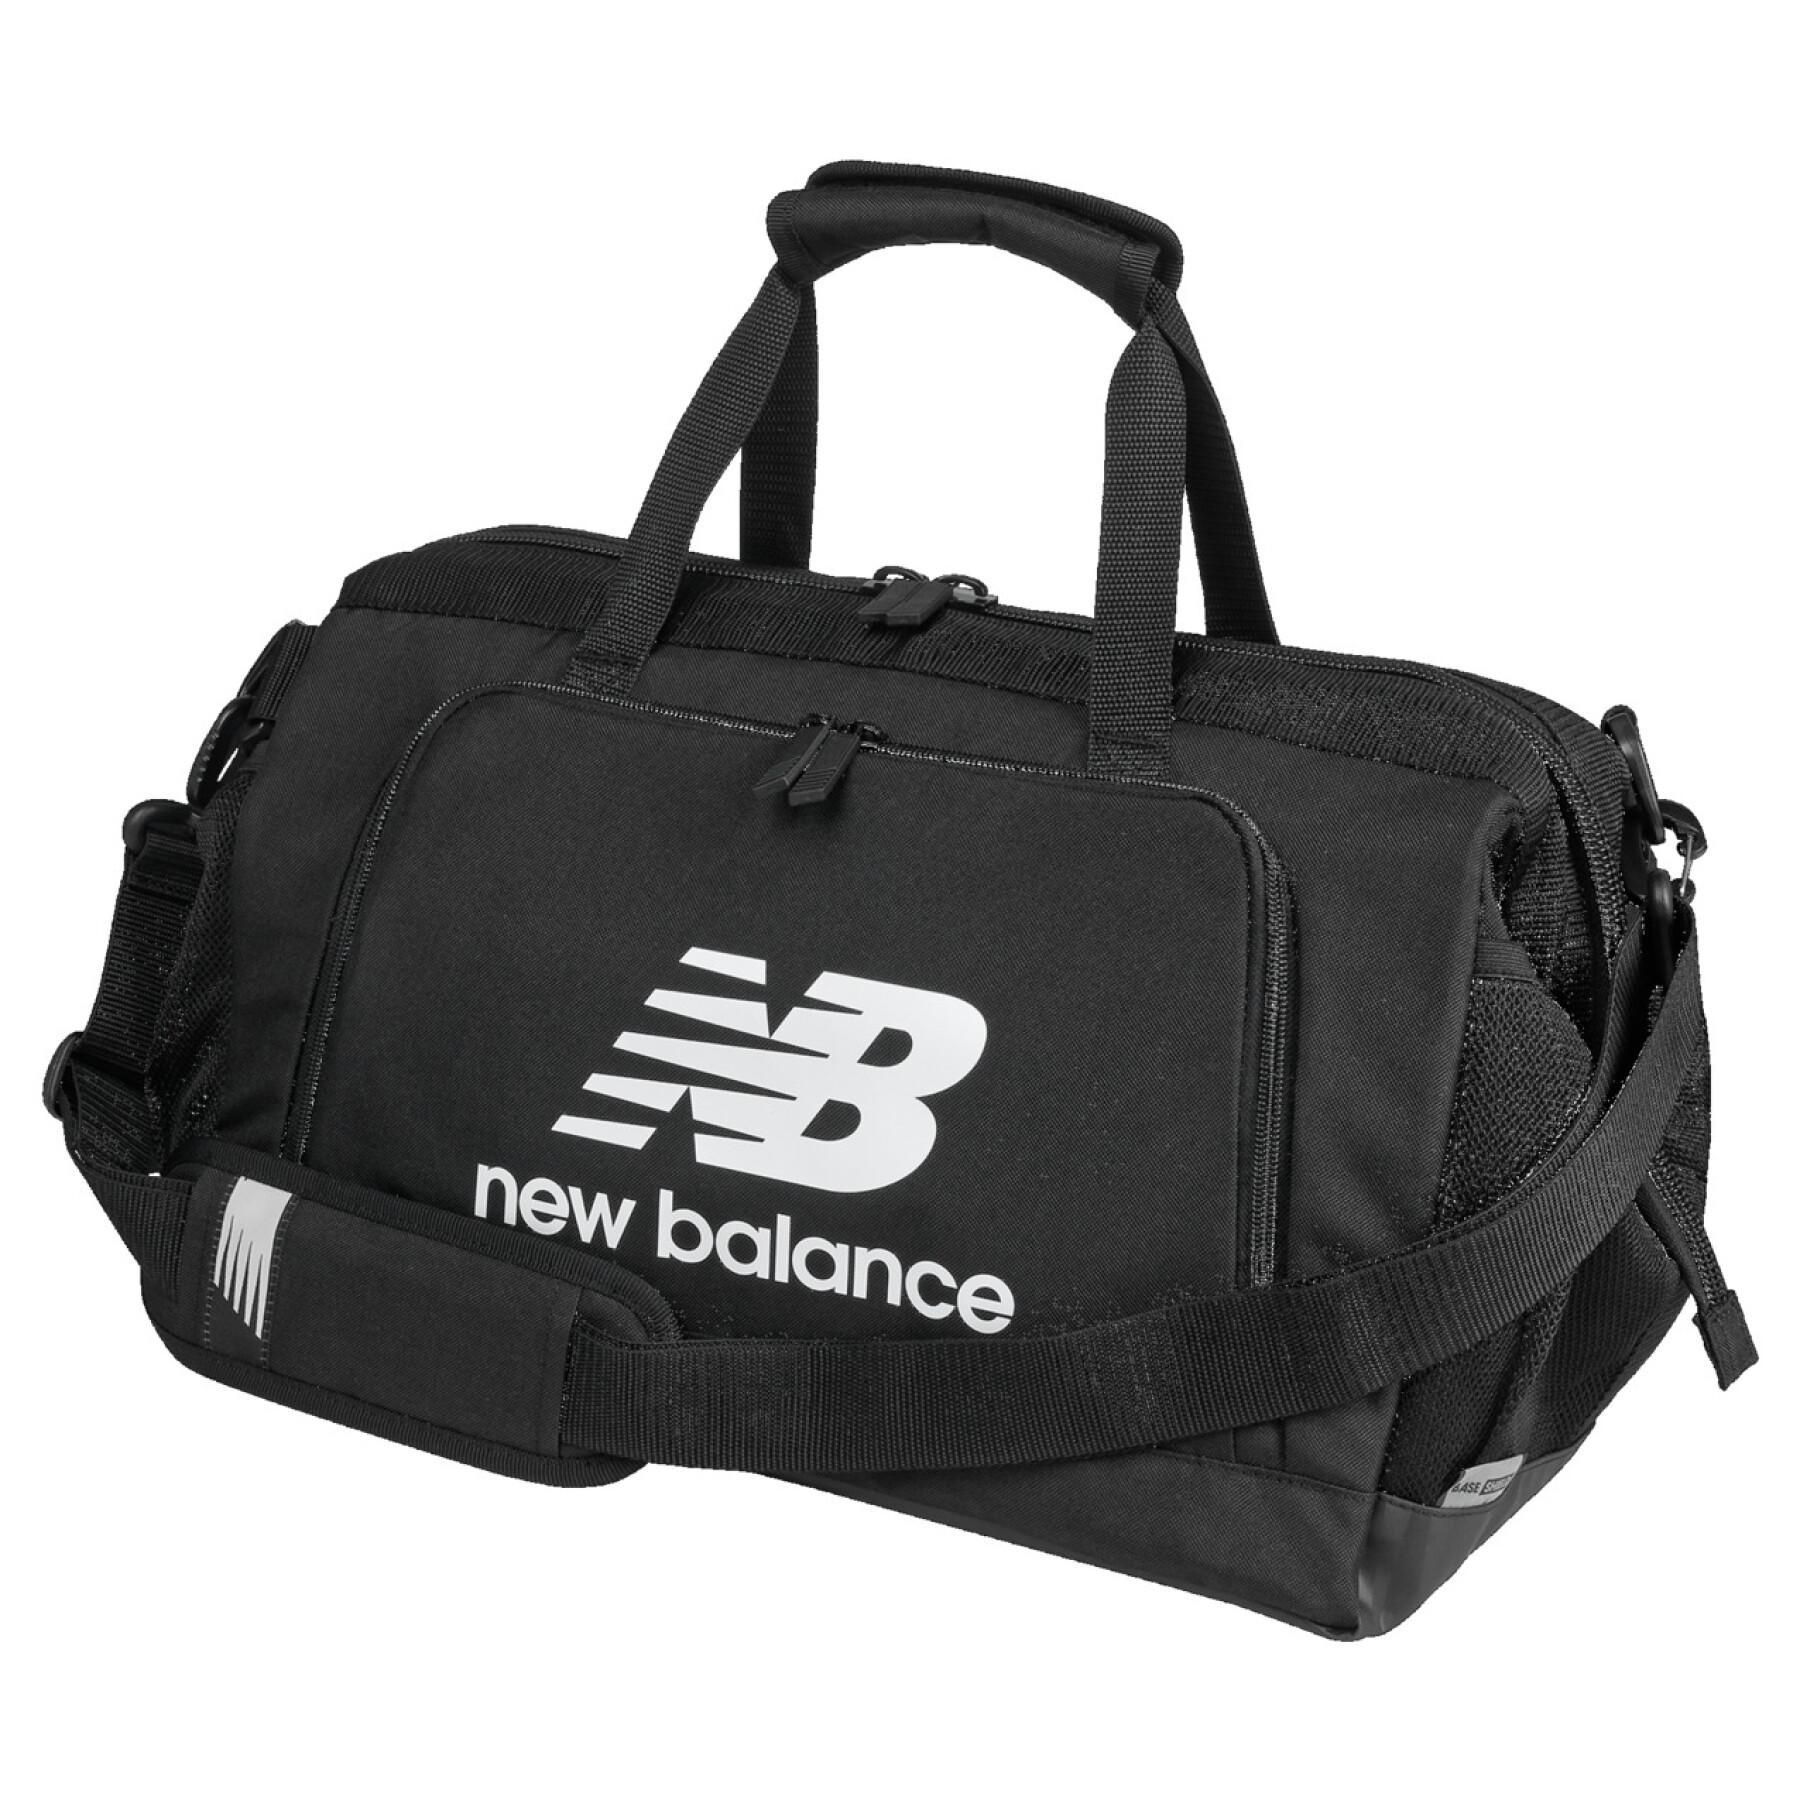 Team medical bag New Balance NBF